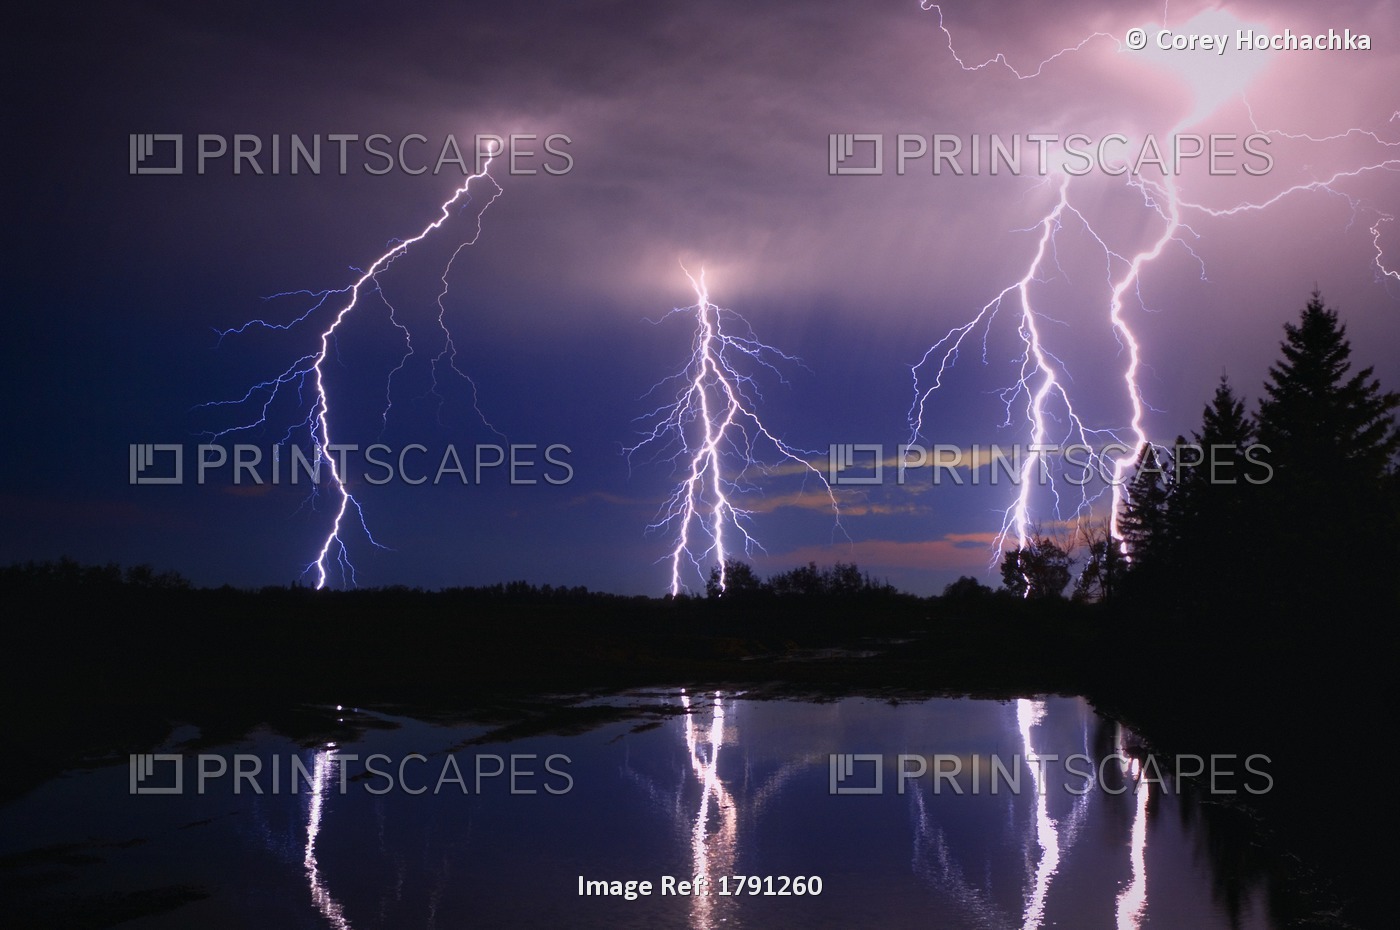 Lightning Storm Over A Lake